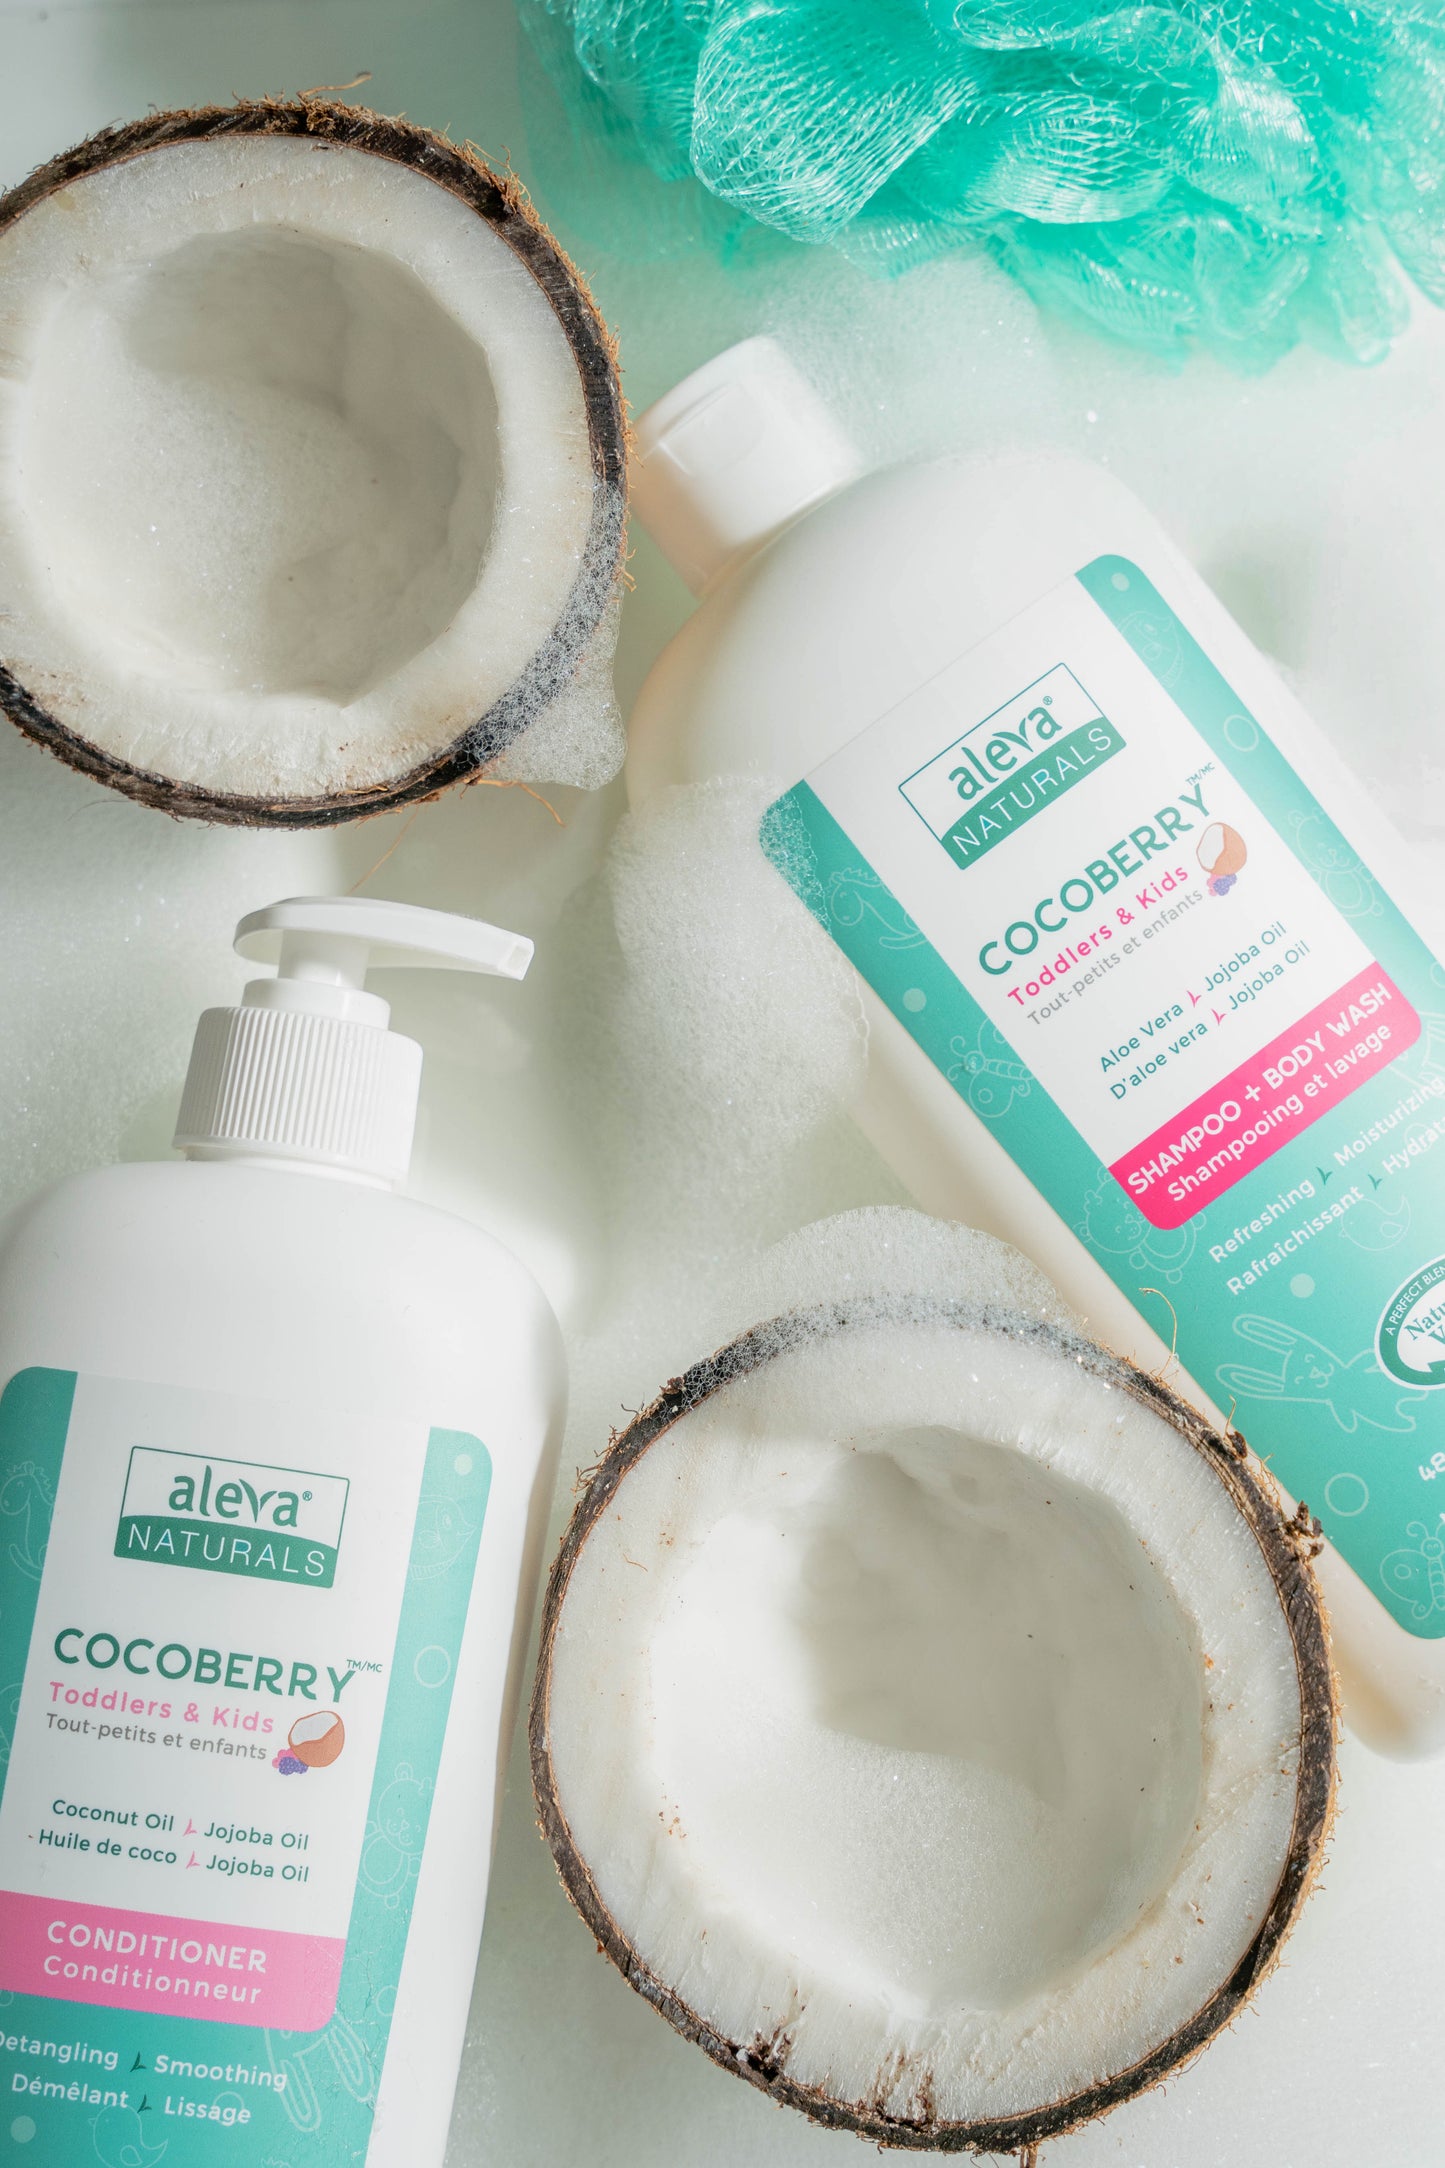 COCOBERRY™ Shampoo + Body Wash